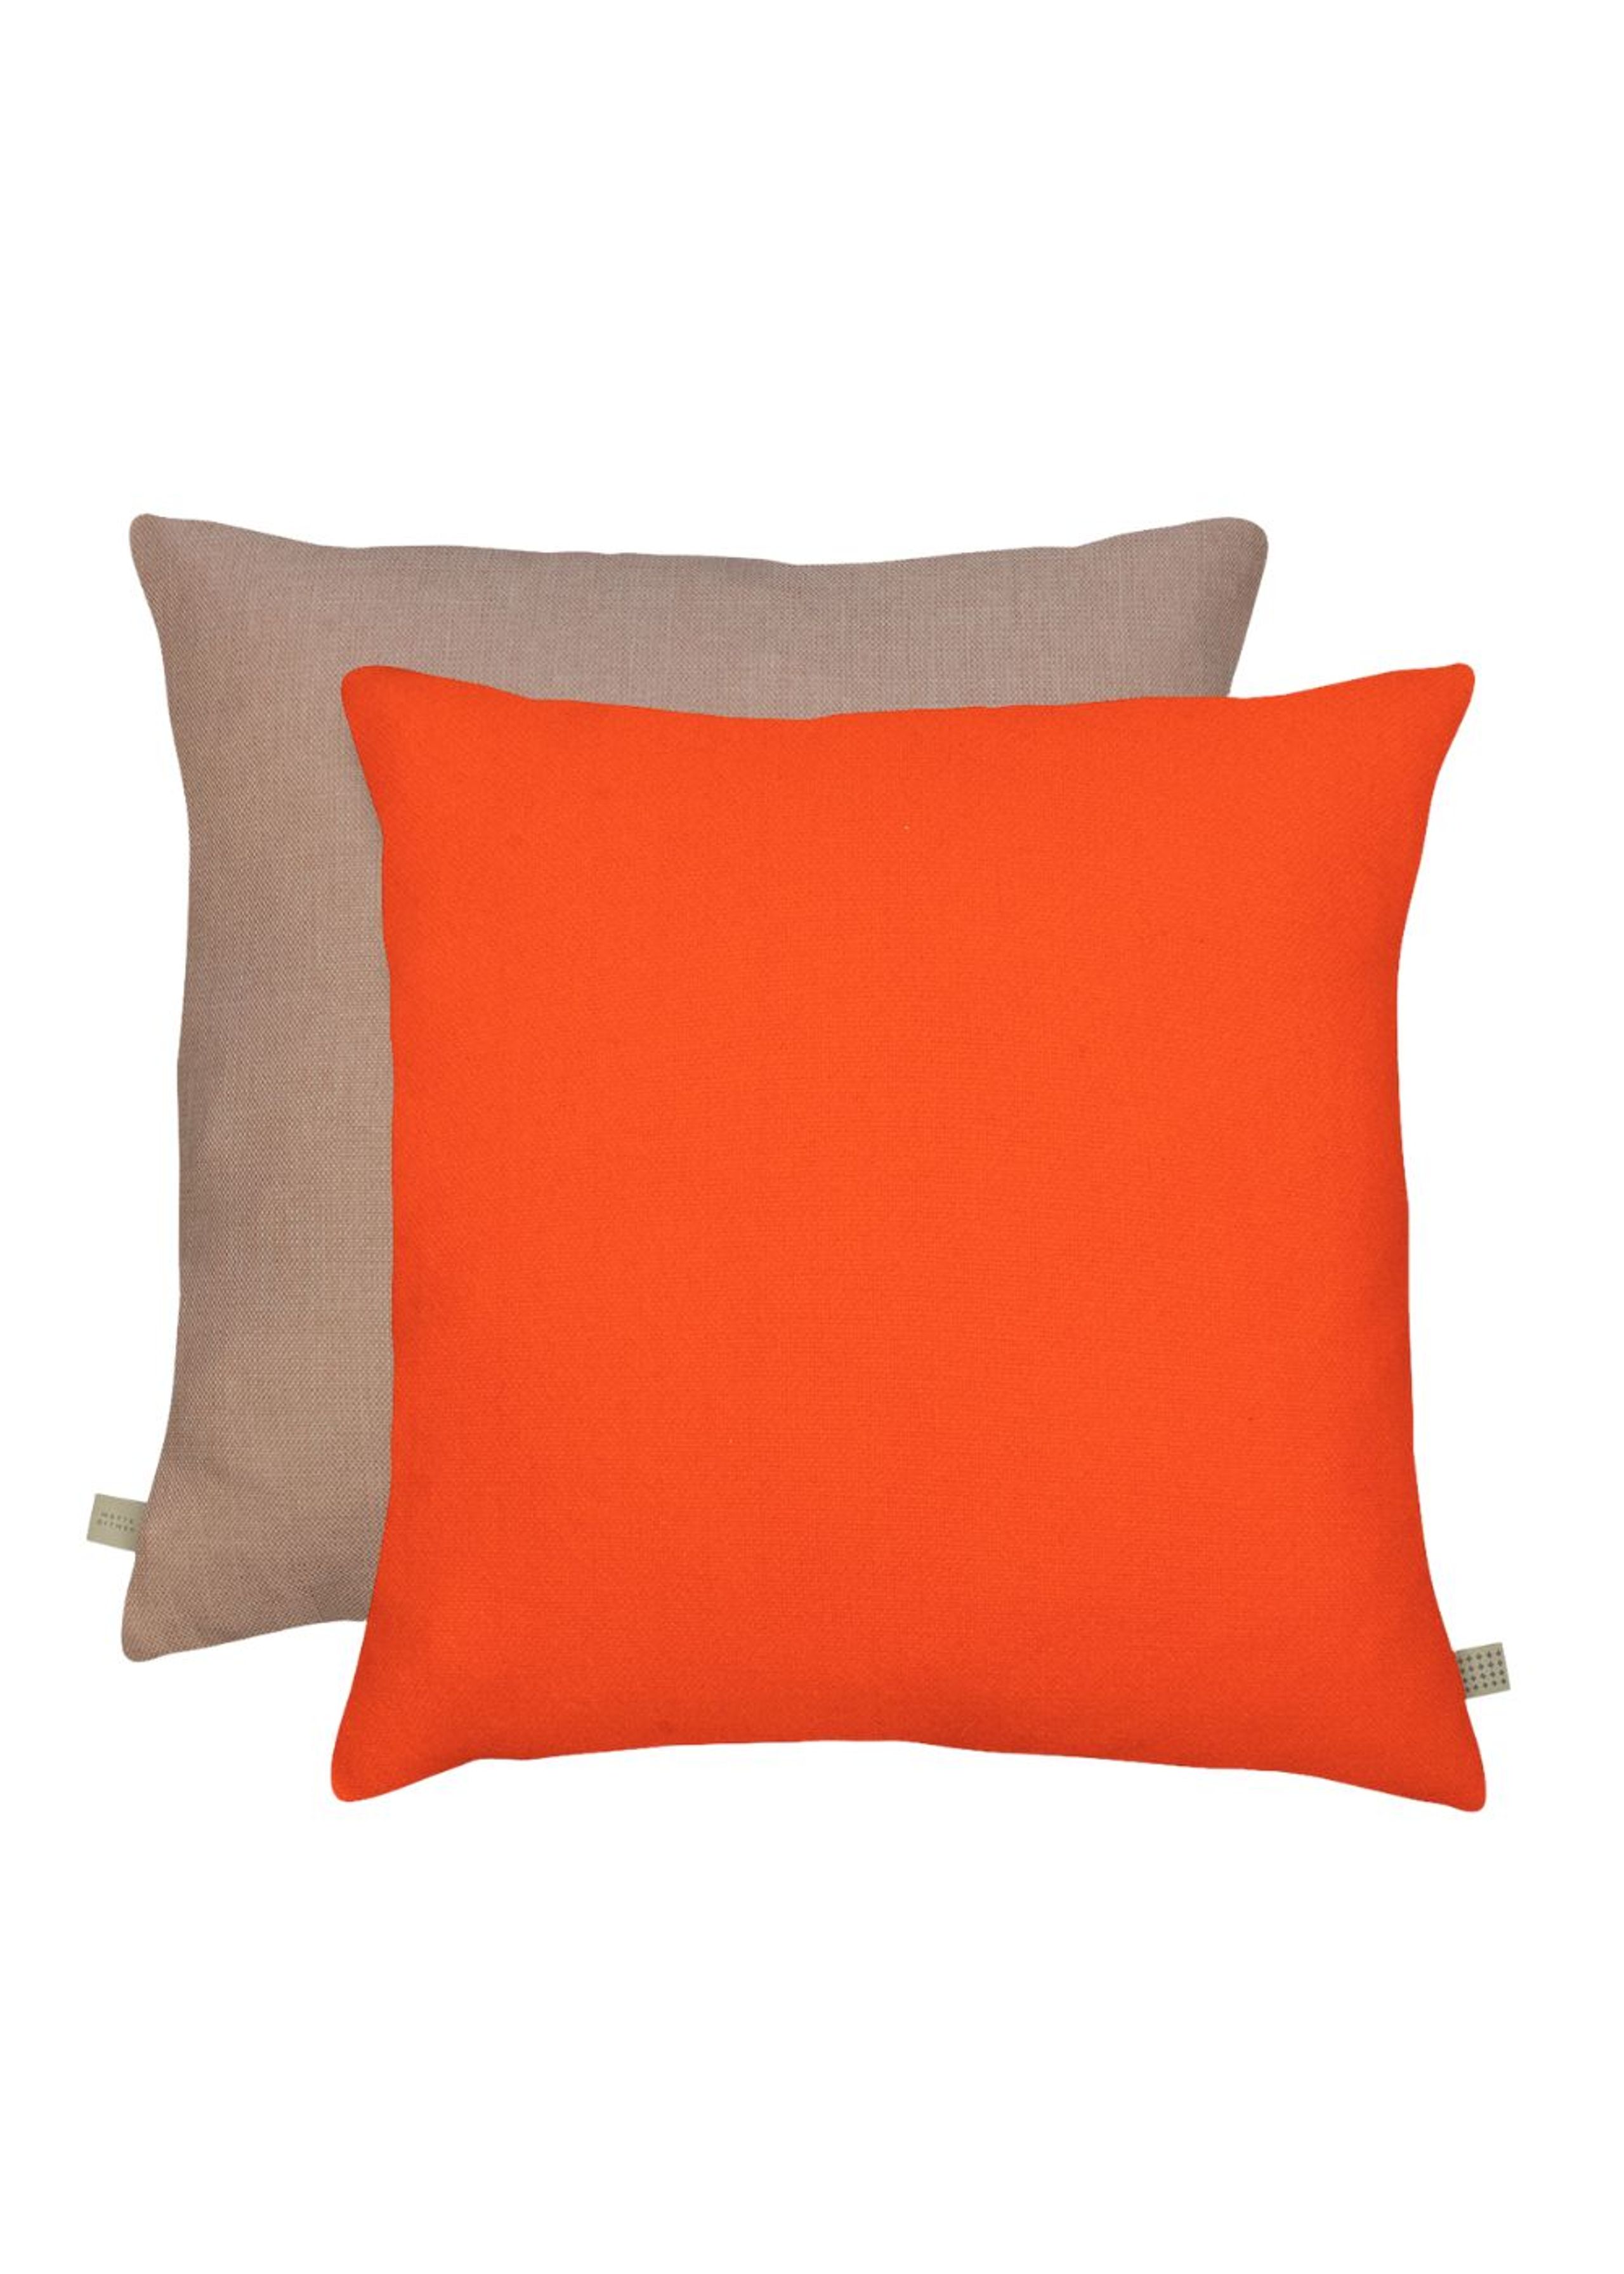 Mette Ditmer - Pillow - SPECTRUM Cushion  - Orange/peach